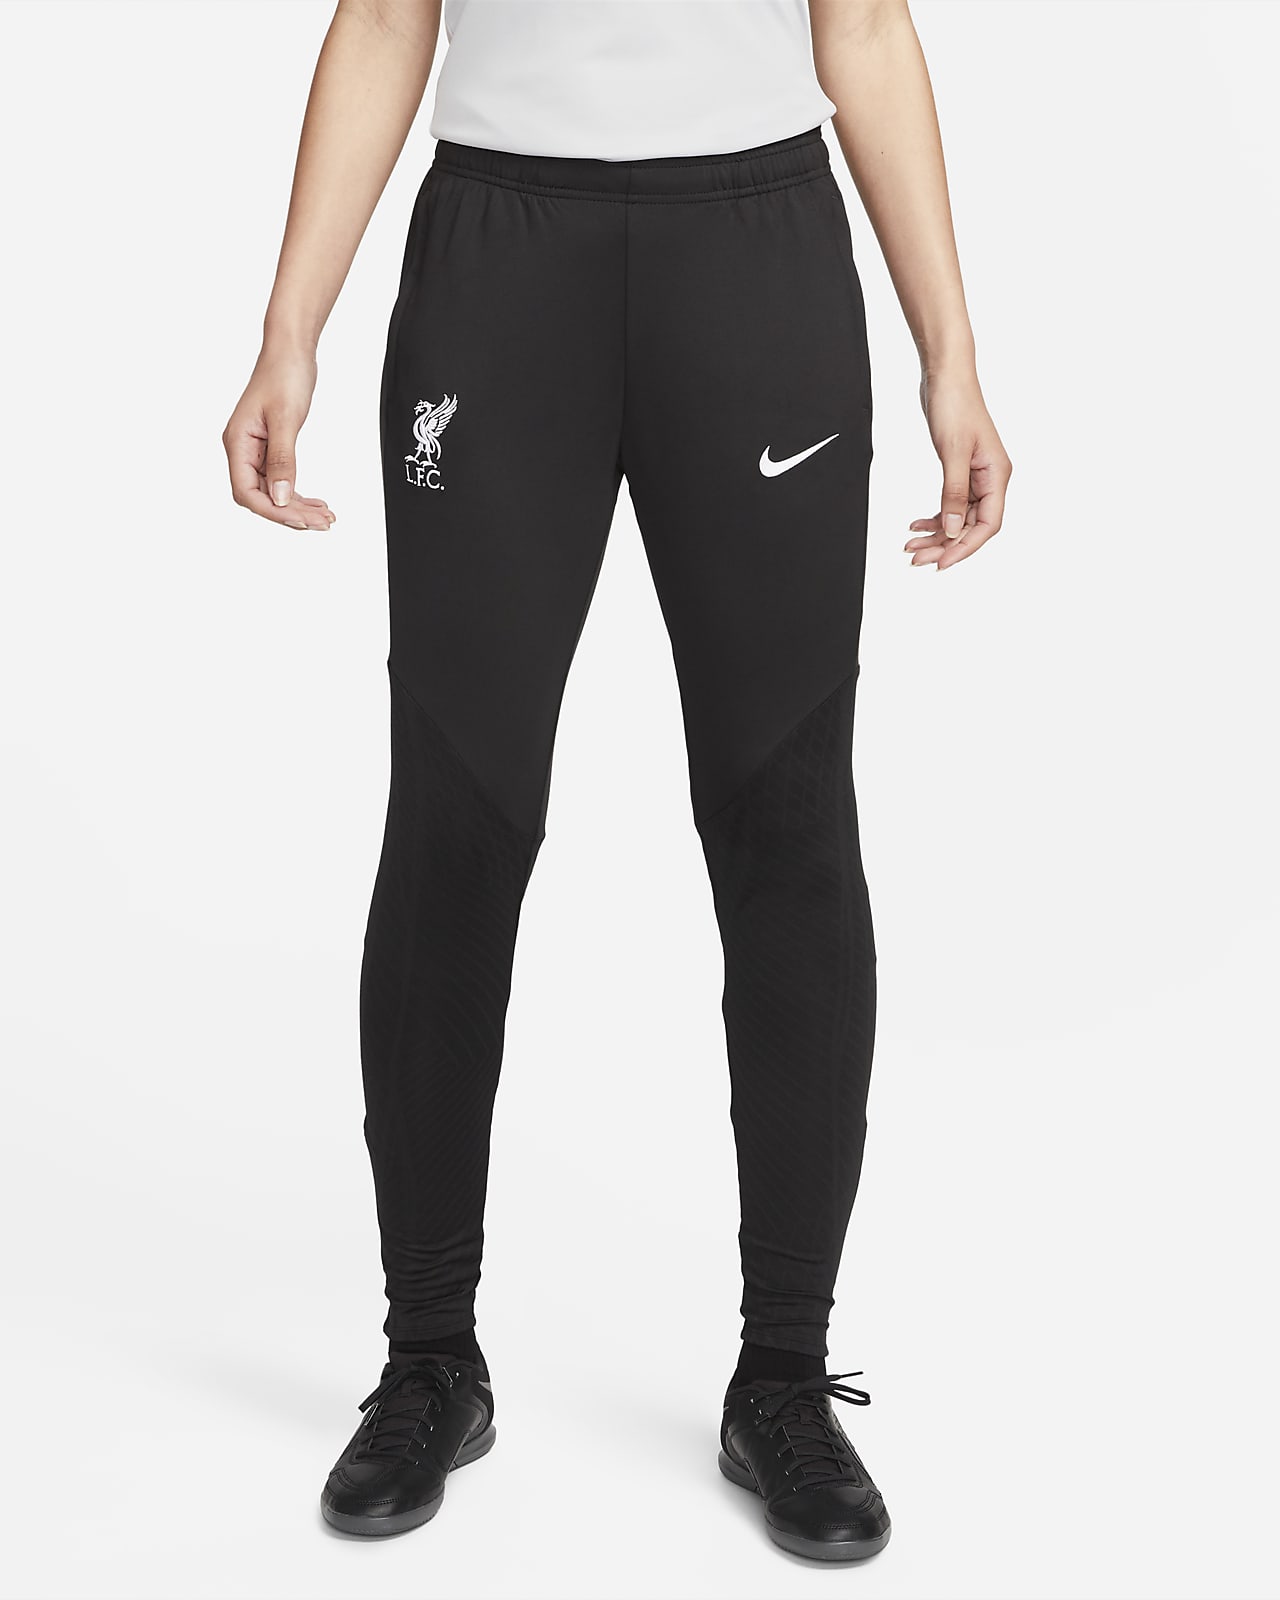 Nike Dri Fit Training Pants Womens Size Small Black 100% Polyester 2 Pockets